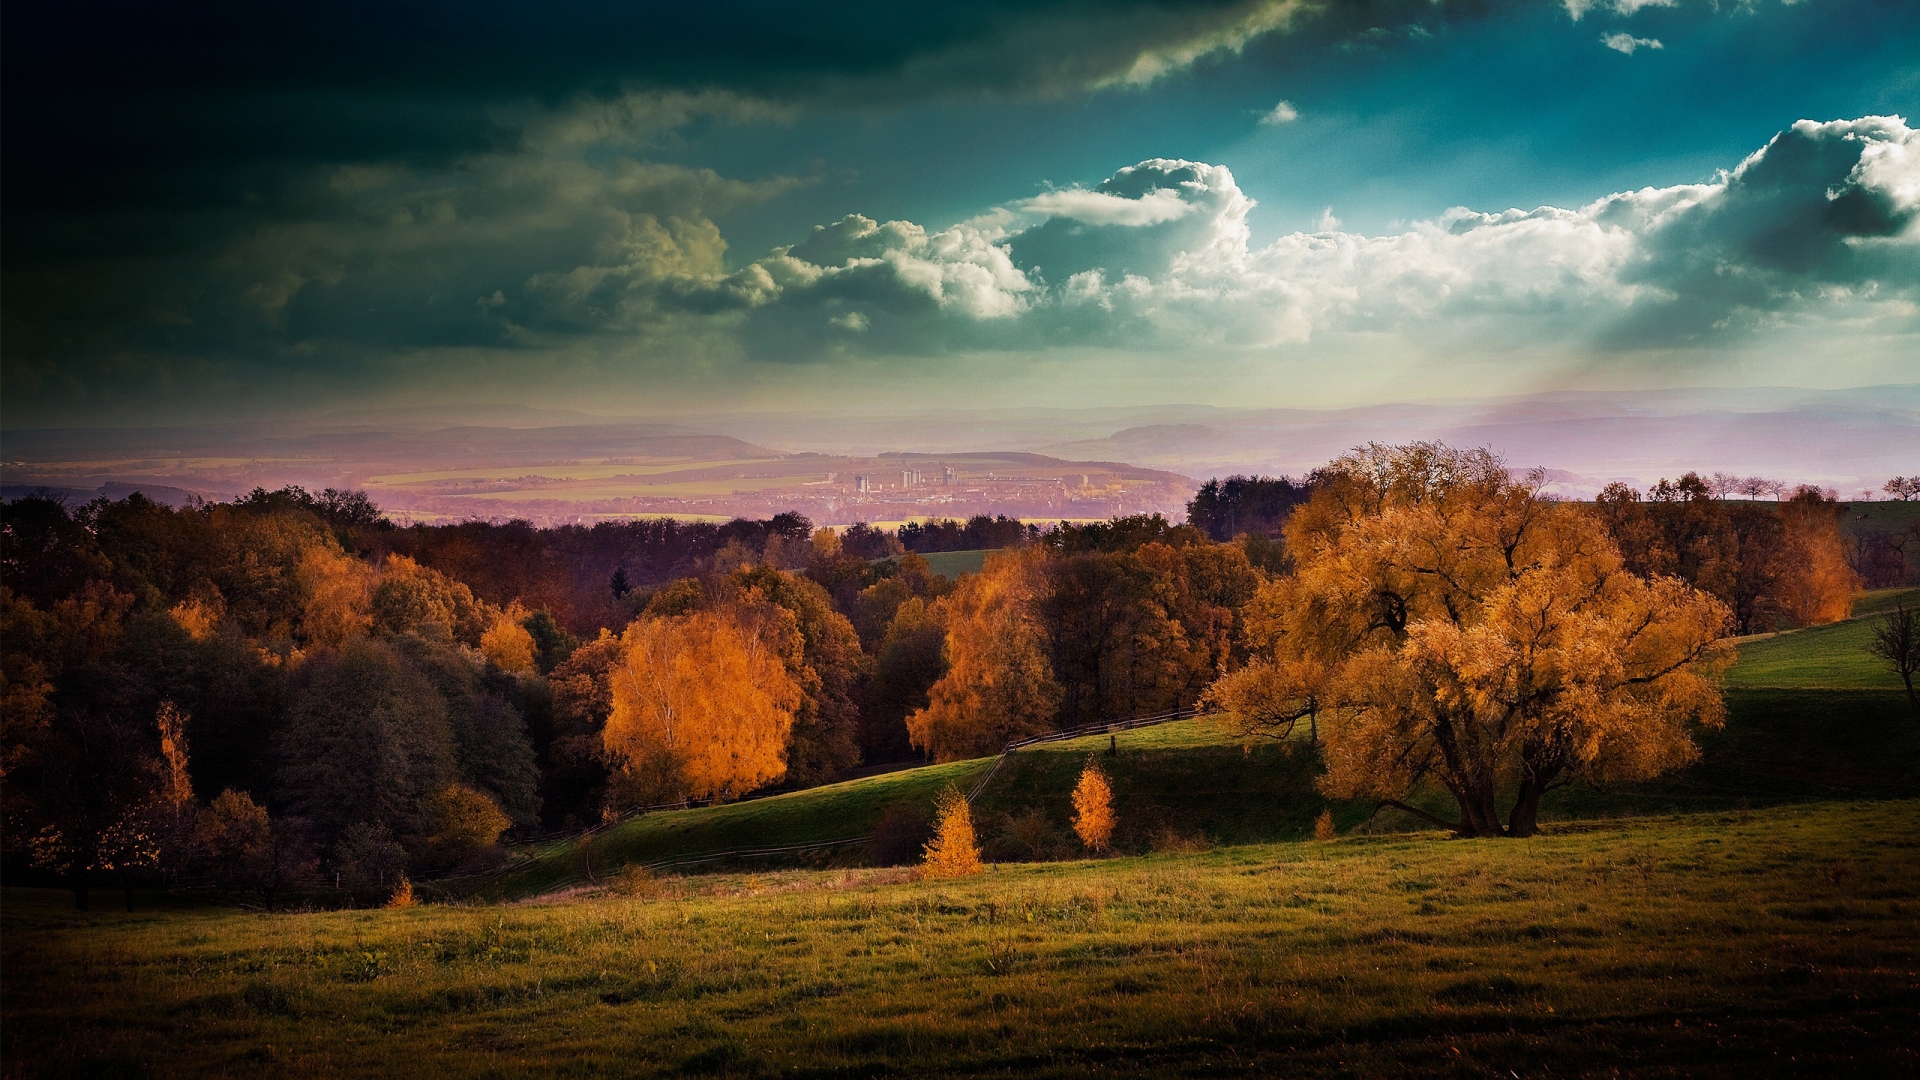 Superb Autumn Landscape for 1920 x 1080 HDTV 1080p resolution